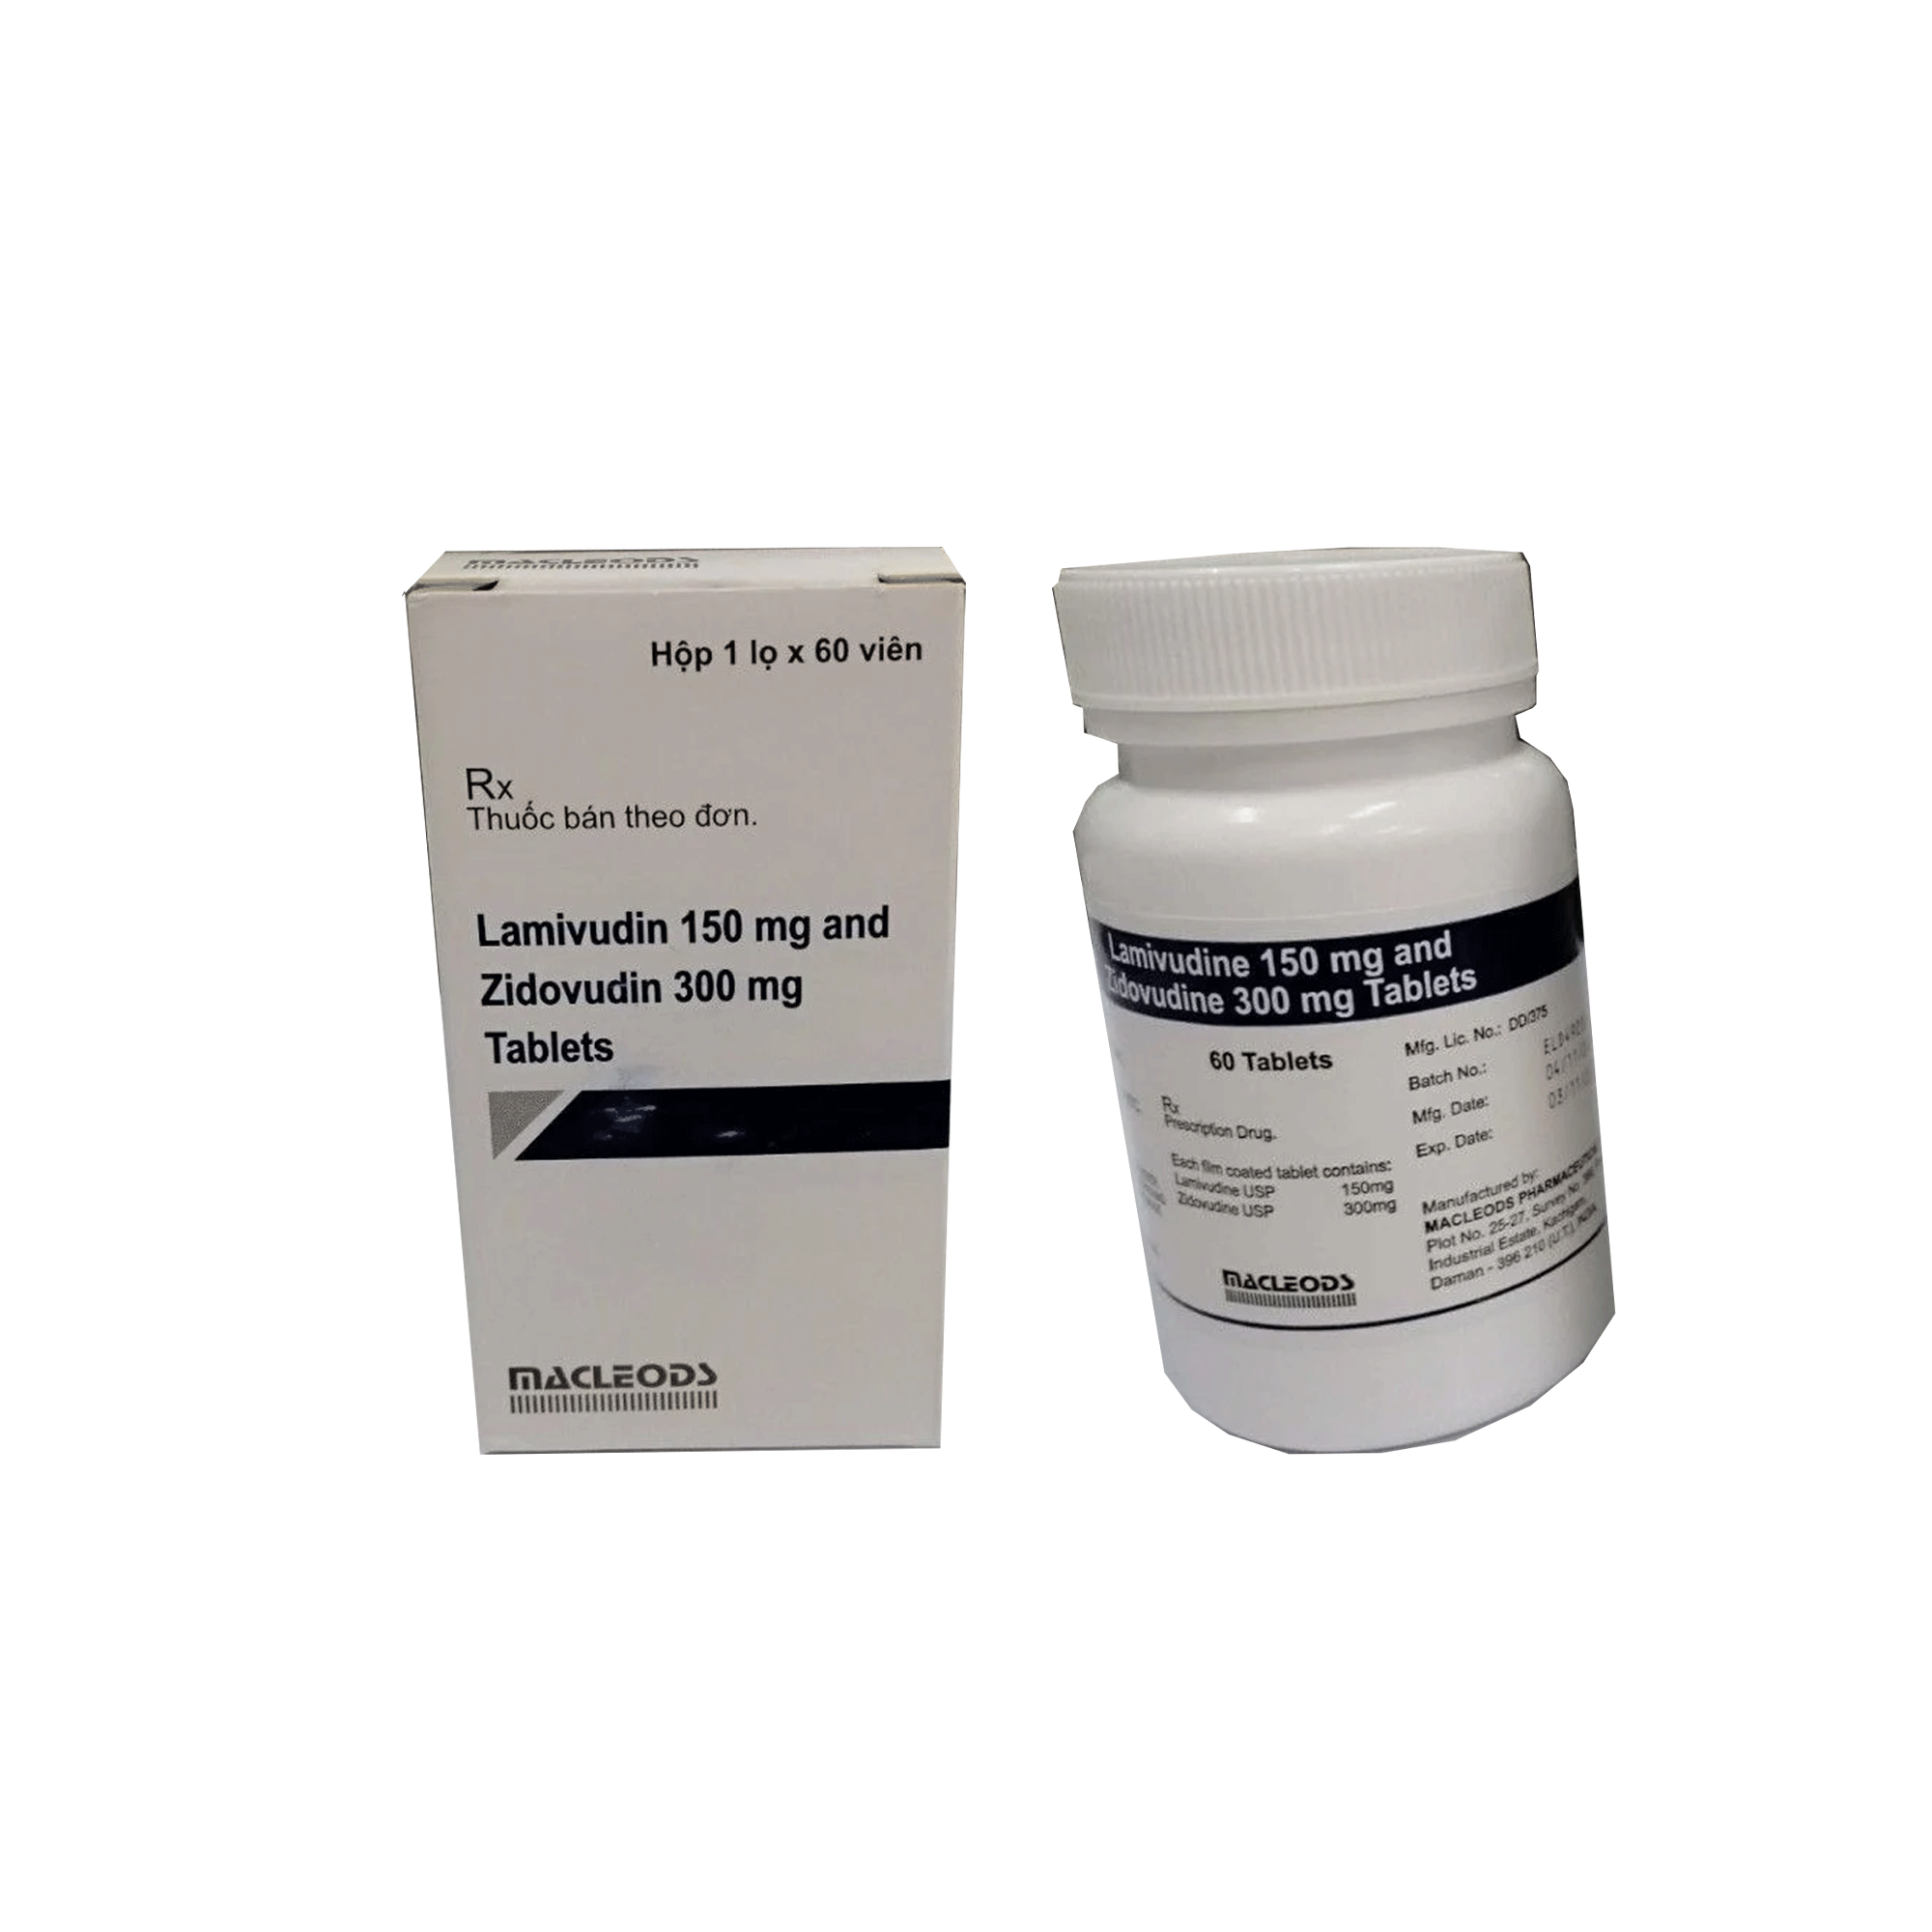 Thuốc-Lamivudine-150mg-and-Zidovudine-300mg-tablets-Macleods-la-thuoc-gi